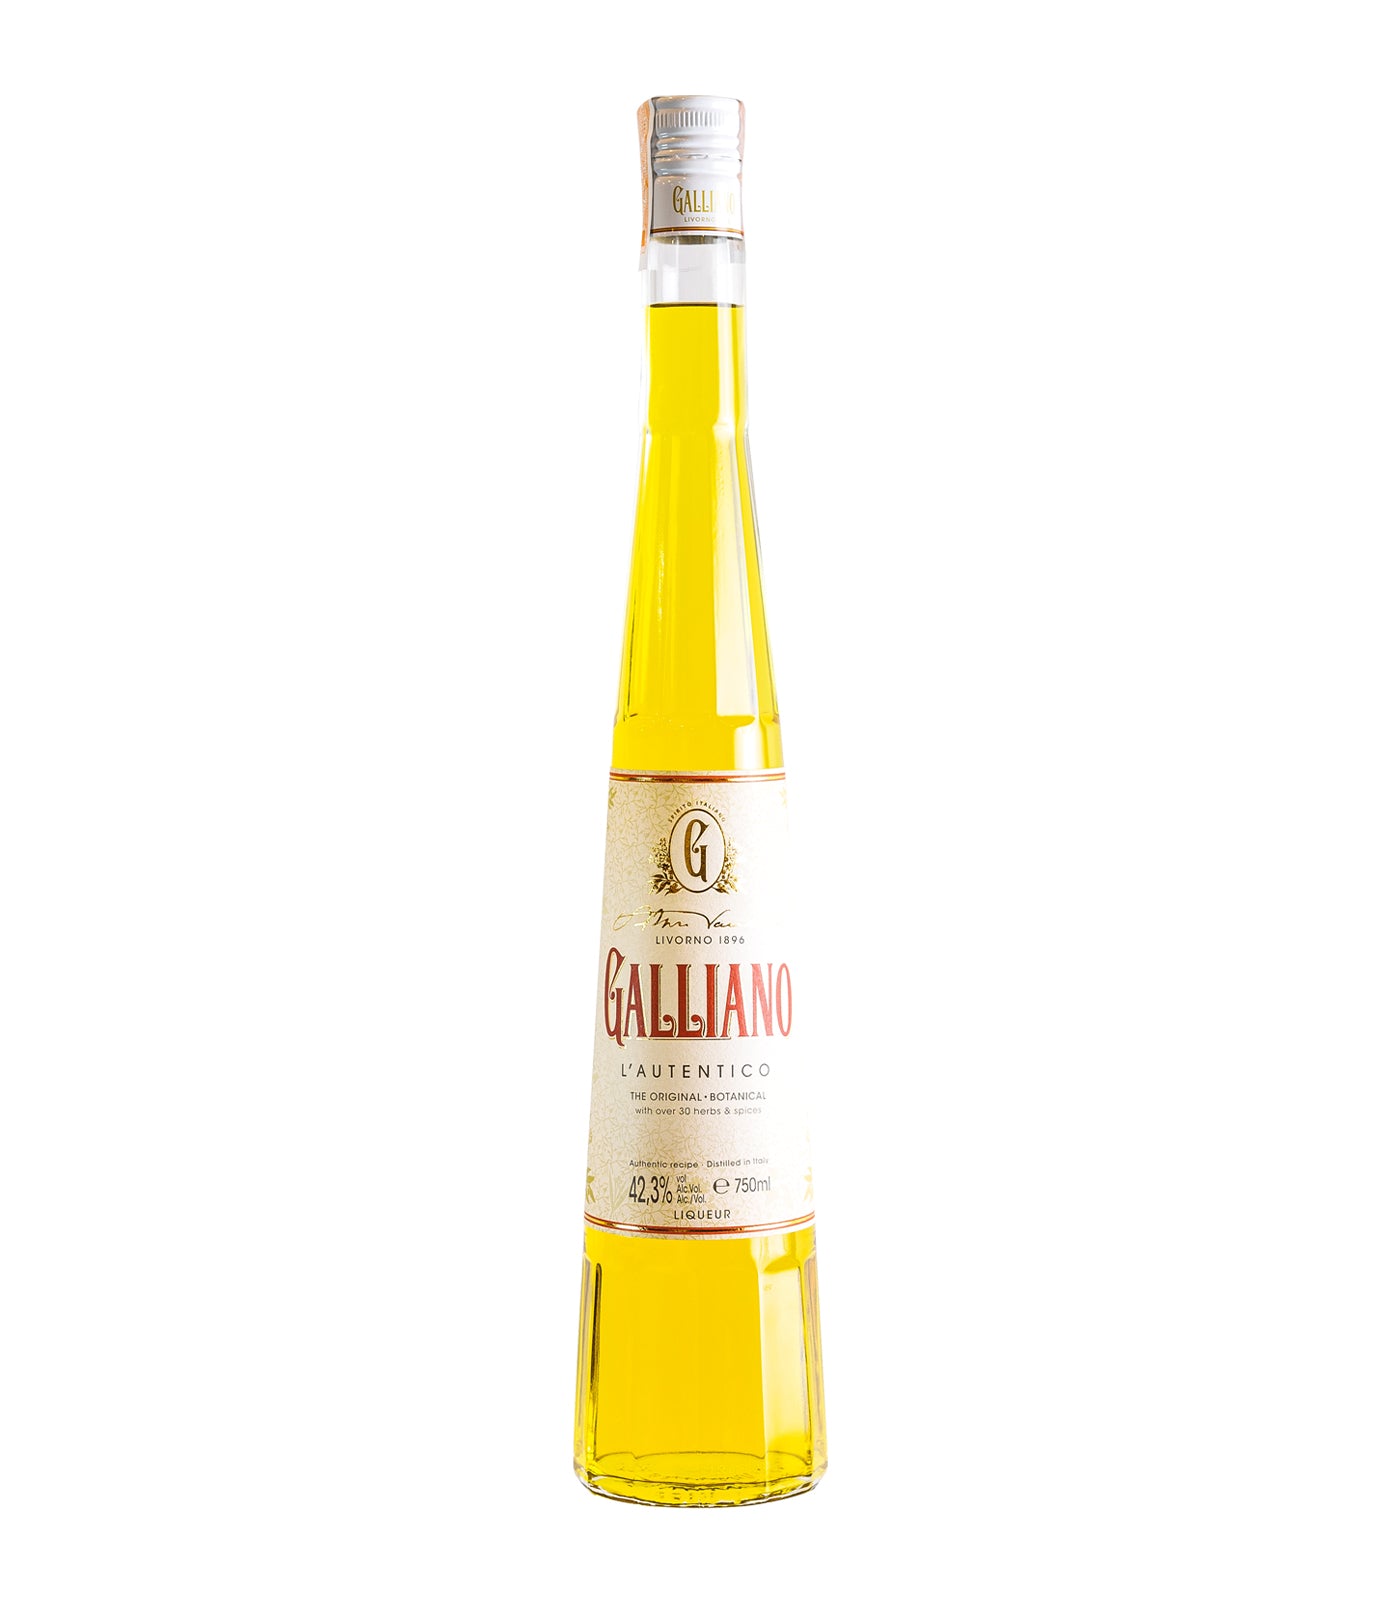 Galliano Liquor Authentico 700ml.